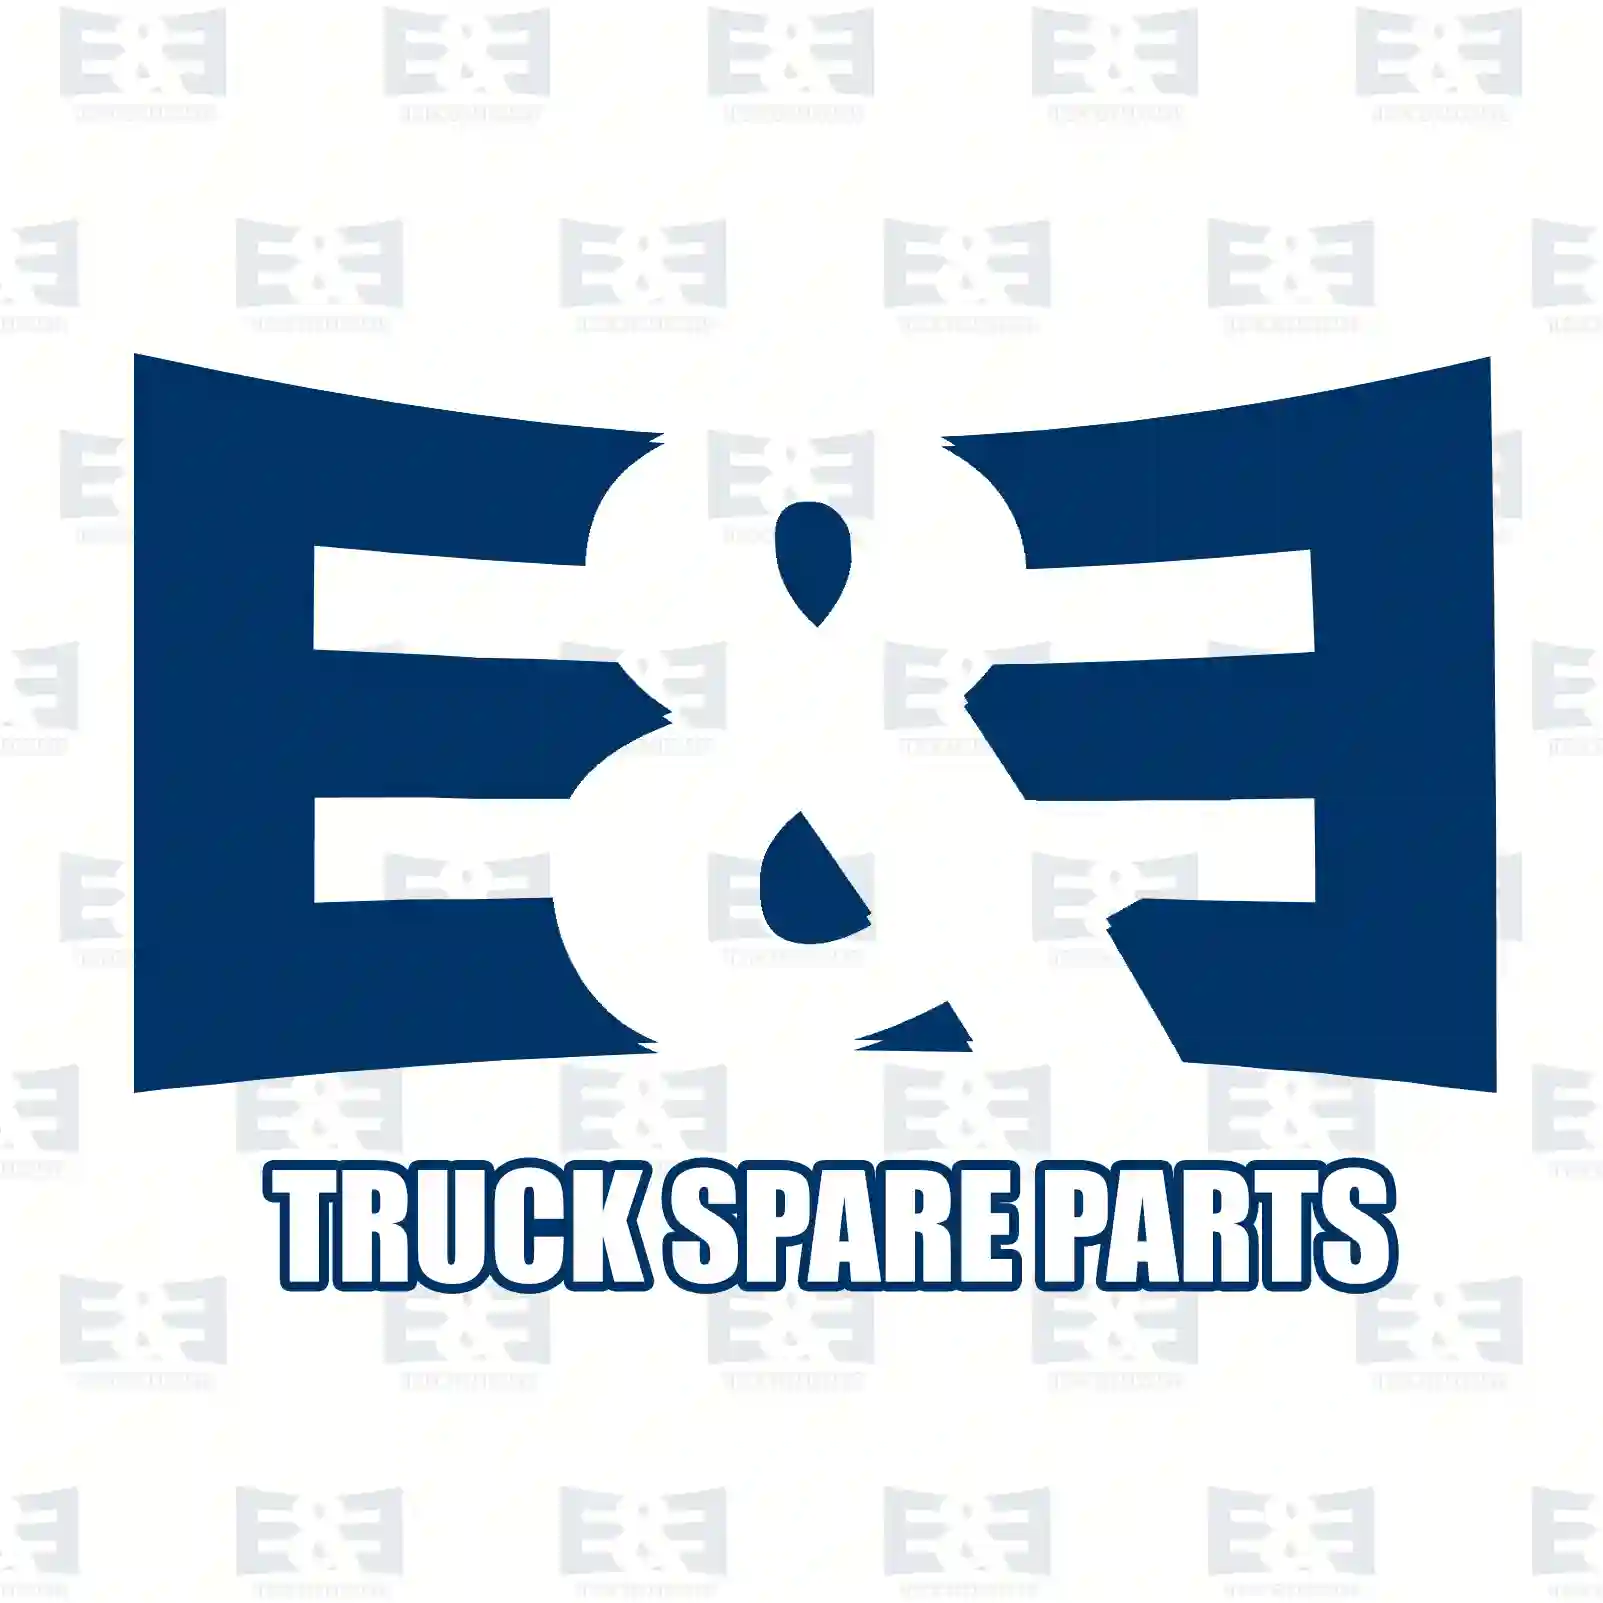 Ball bearing, 2E2285083, 1403938, 1623800, 500358297, 504077114, 5010622204, 5010622204, 139246, 228836, 478213, 11012, 181335, 20796222, 25378261, ZG40197-0008 ||  2E2285083 E&E Truck Spare Parts | Truck Spare Parts, Auotomotive Spare Parts Ball bearing, 2E2285083, 1403938, 1623800, 500358297, 504077114, 5010622204, 5010622204, 139246, 228836, 478213, 11012, 181335, 20796222, 25378261, ZG40197-0008 ||  2E2285083 E&E Truck Spare Parts | Truck Spare Parts, Auotomotive Spare Parts